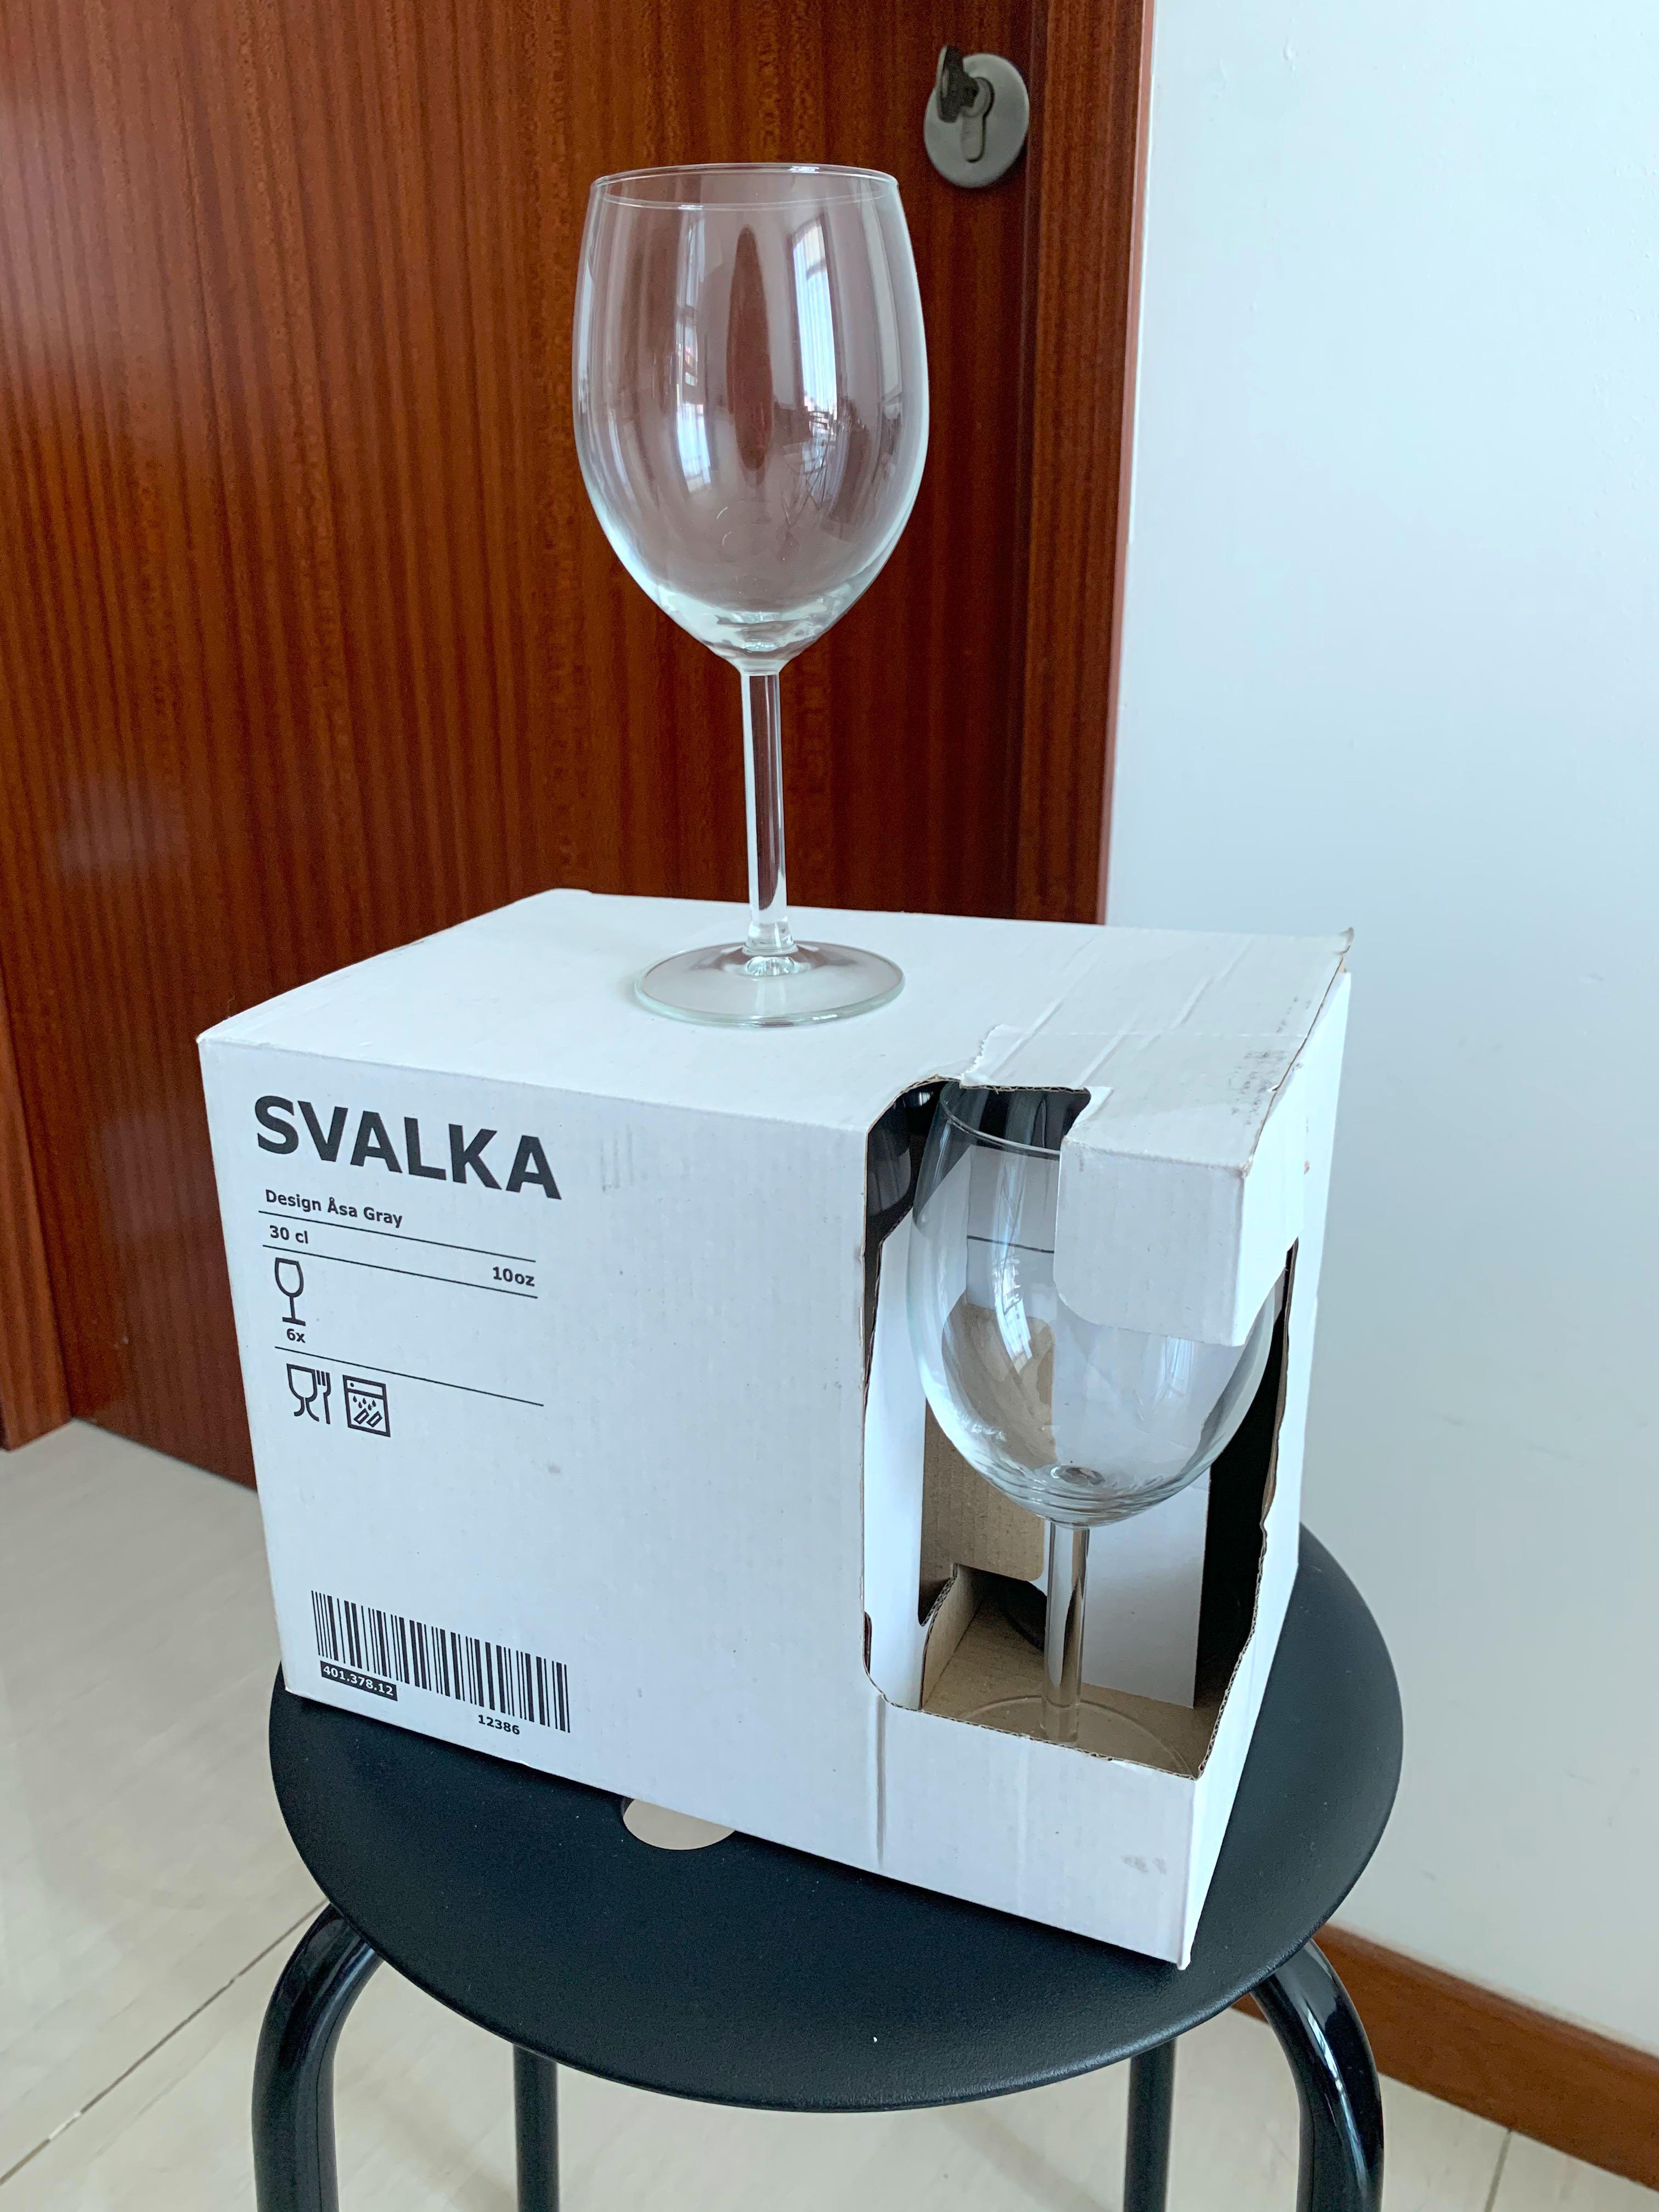 https://media.karousell.com/media/photos/products/2021/5/20/ikea_svalka_wine_glasses_7_pie_1621474781_b5d220d7_progressive.jpg